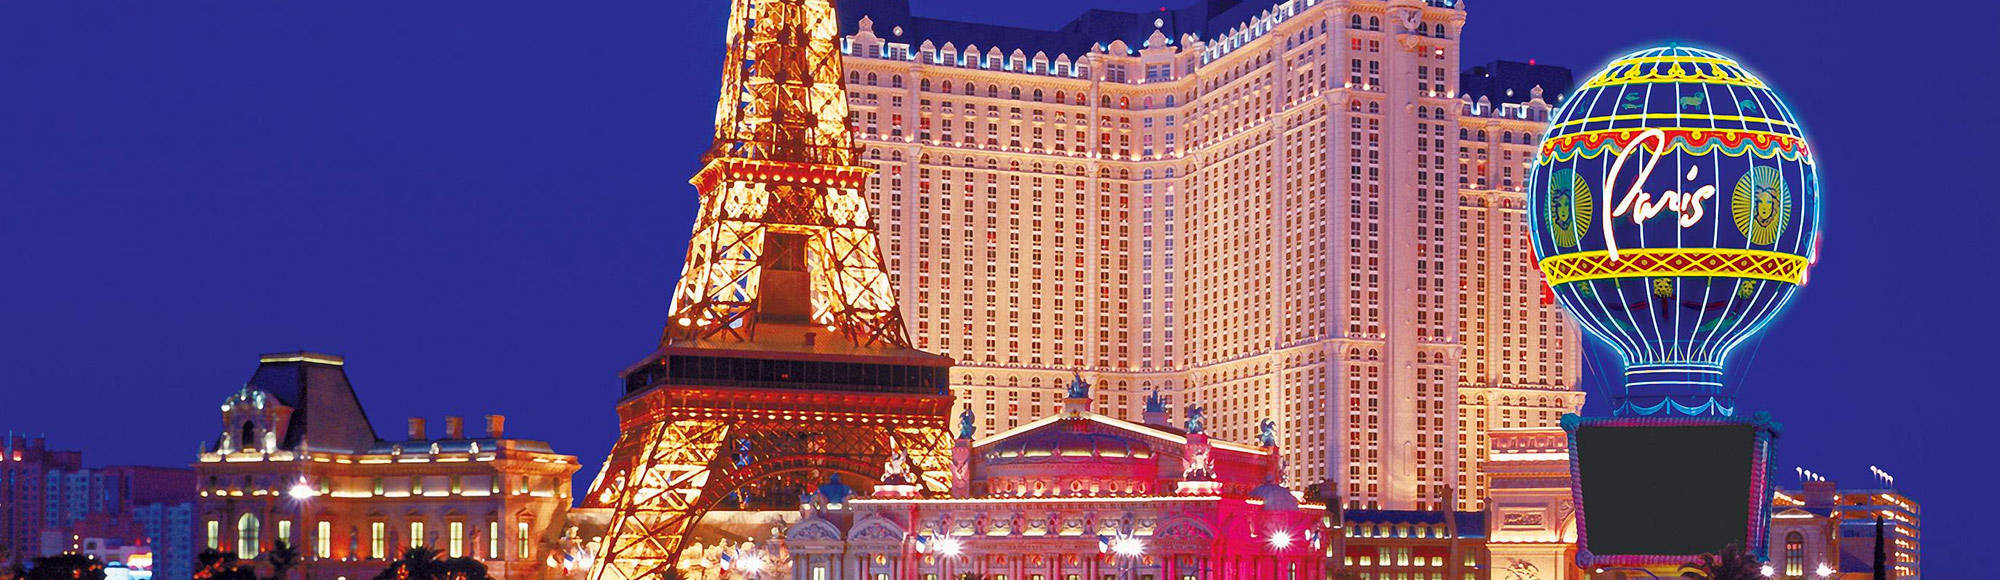 Light Hotel Buildings Paris Las Vegas Wallpaper